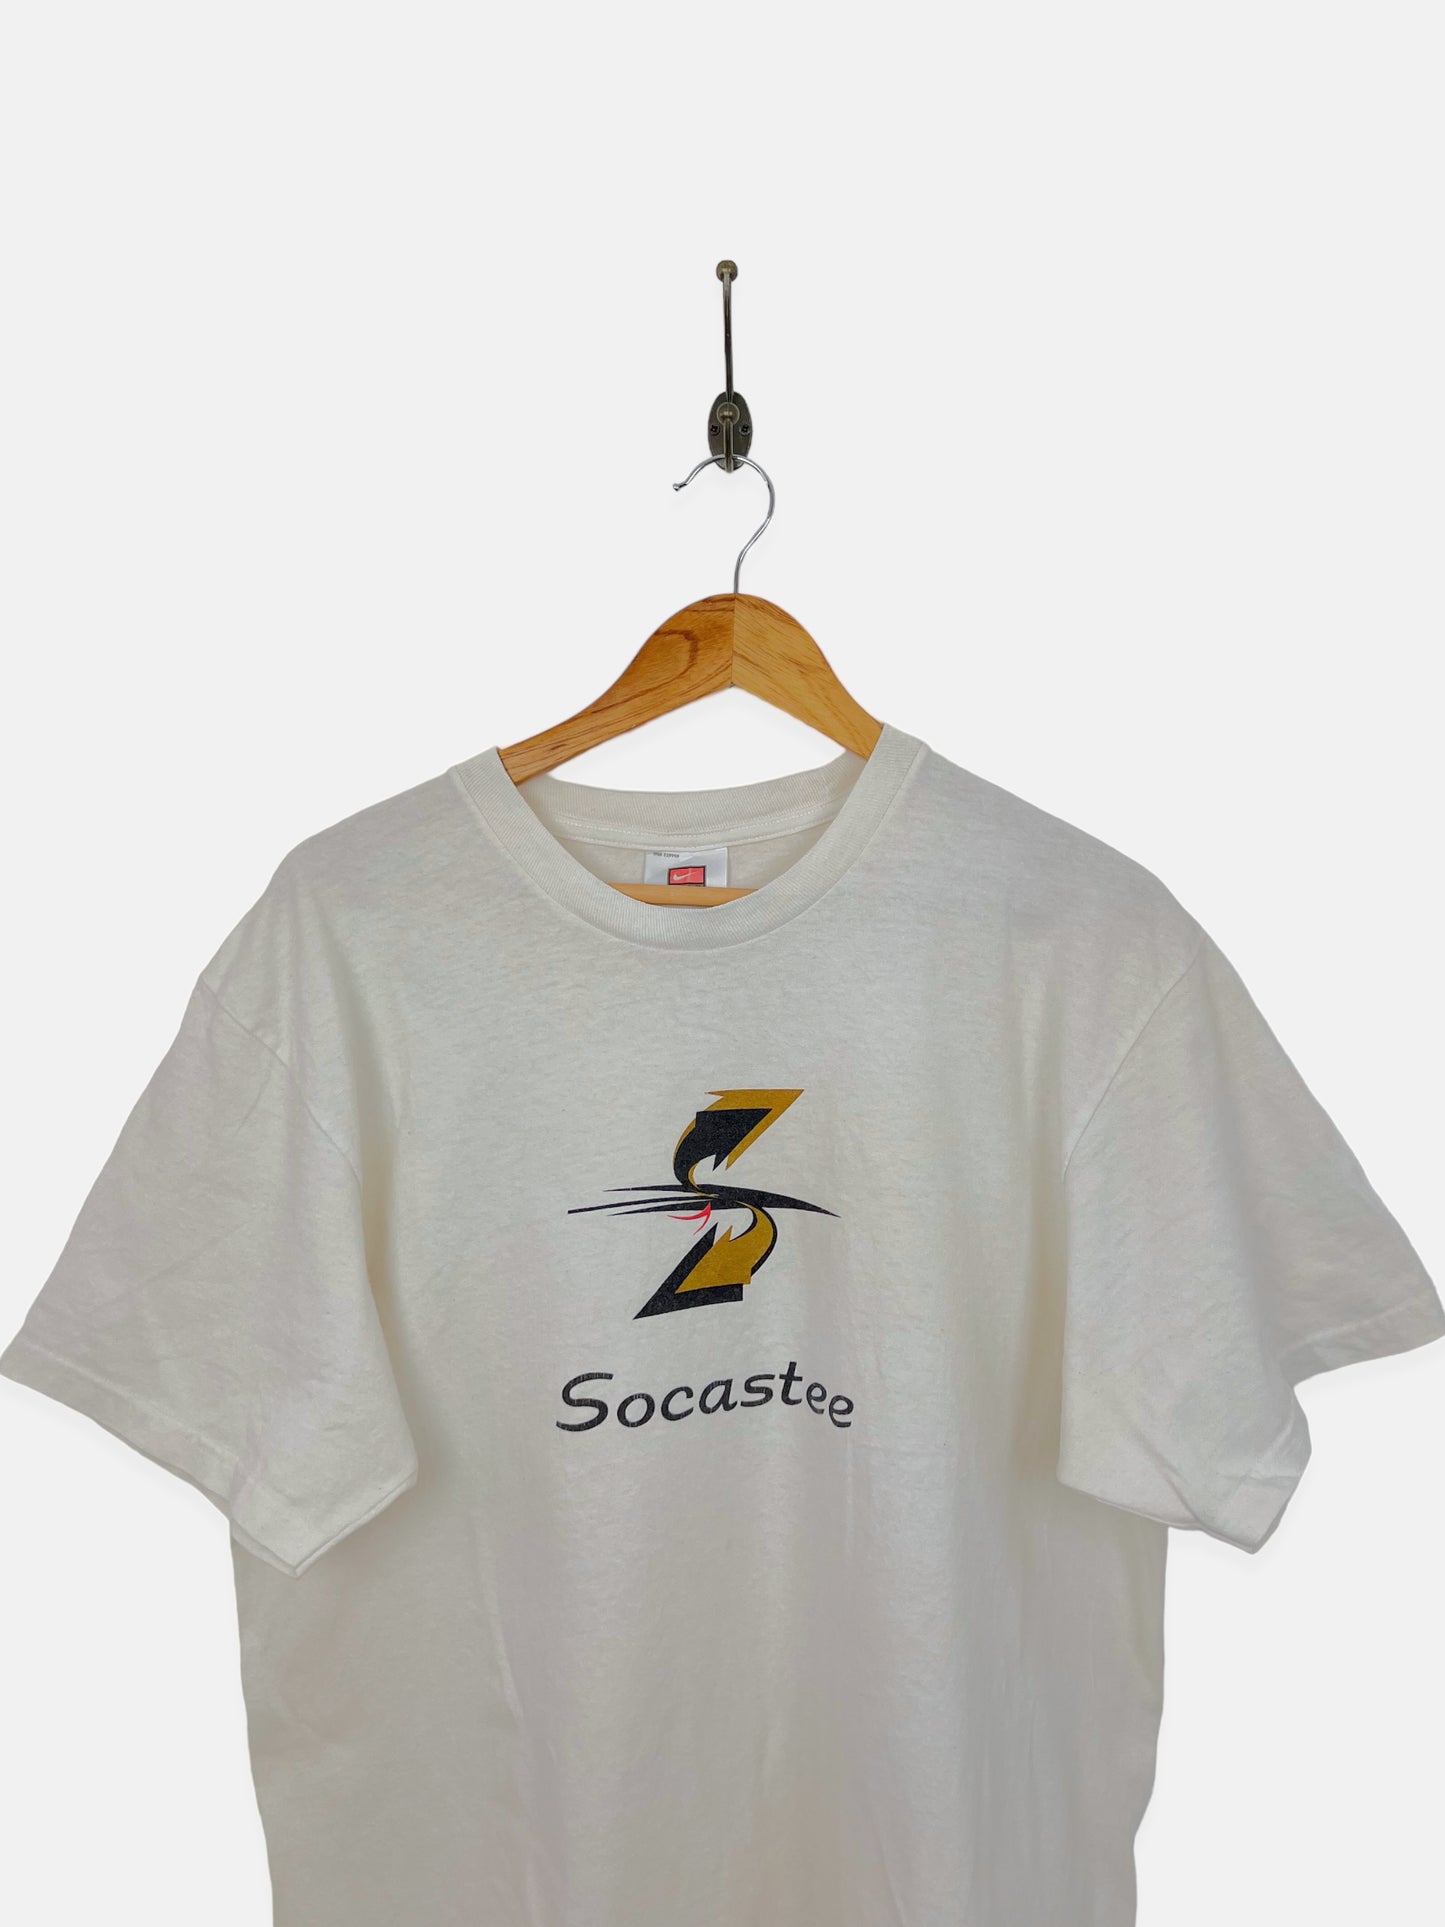 90's Nike Socastee Vintage T-Shirt Size M